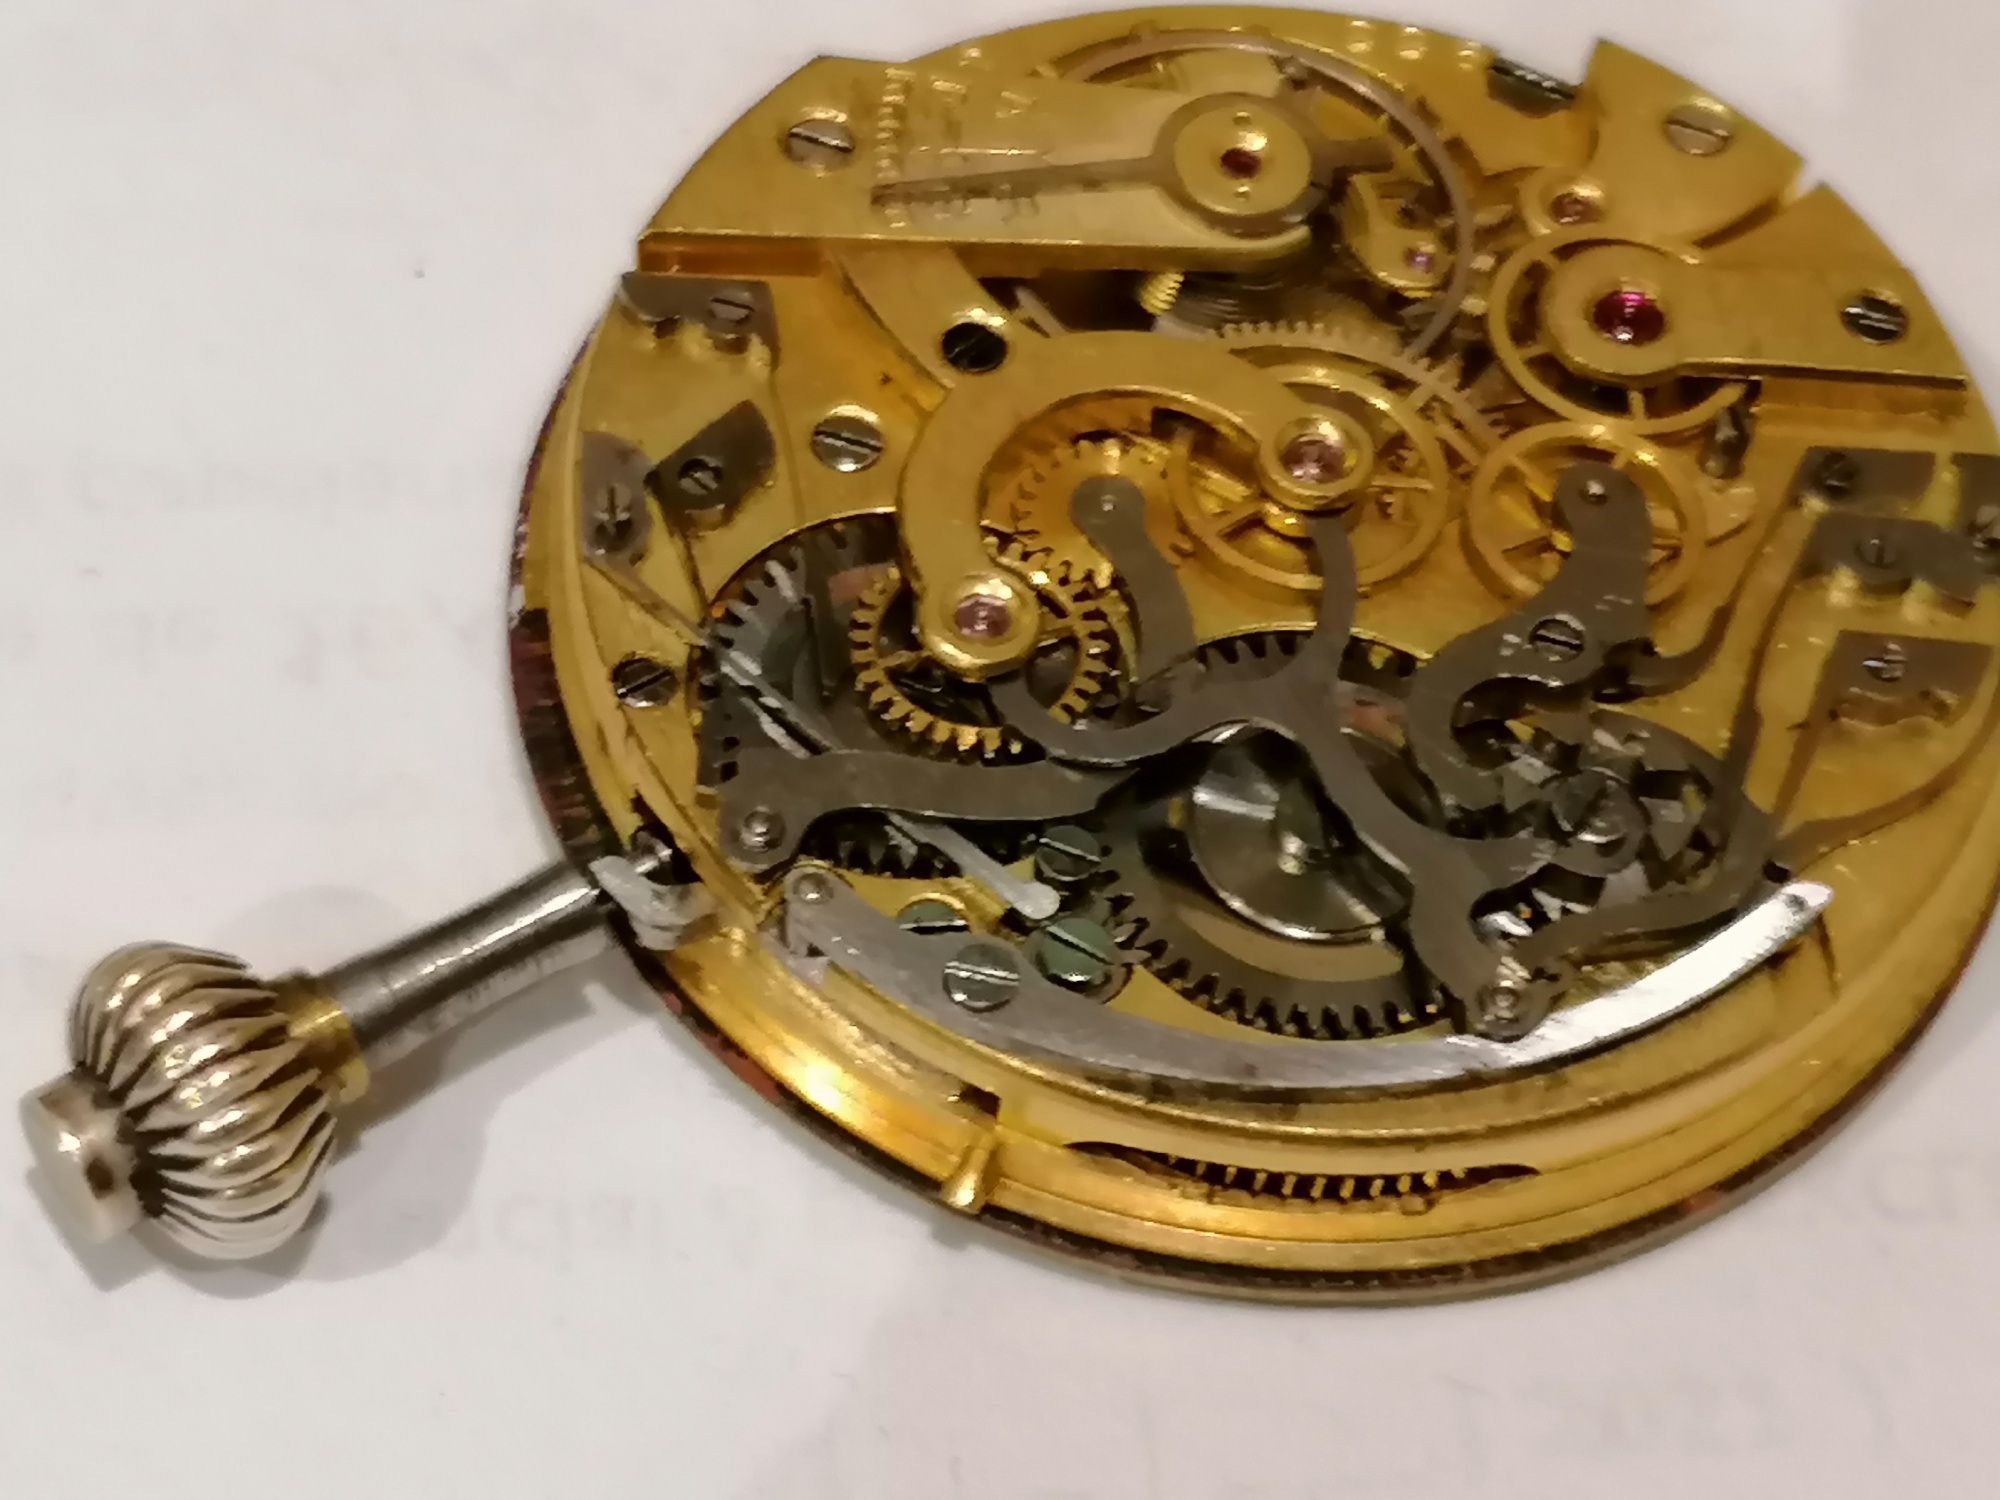 Breitling chronograph pocket